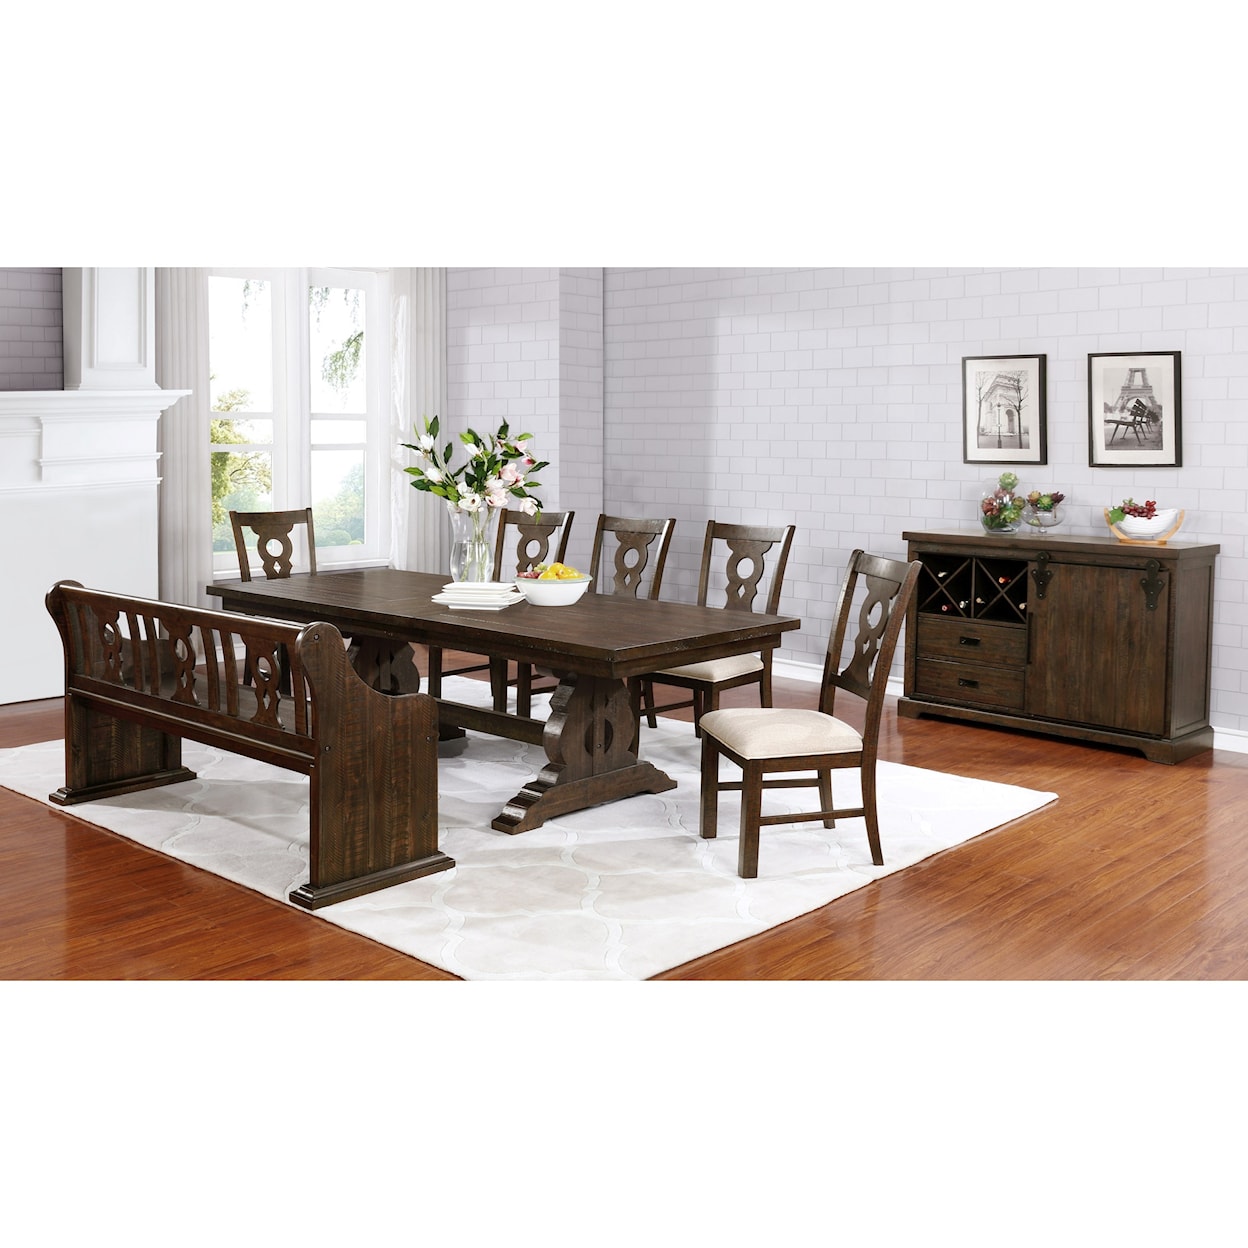 Avalon Furniture Lancaster Formal Dining Room Group